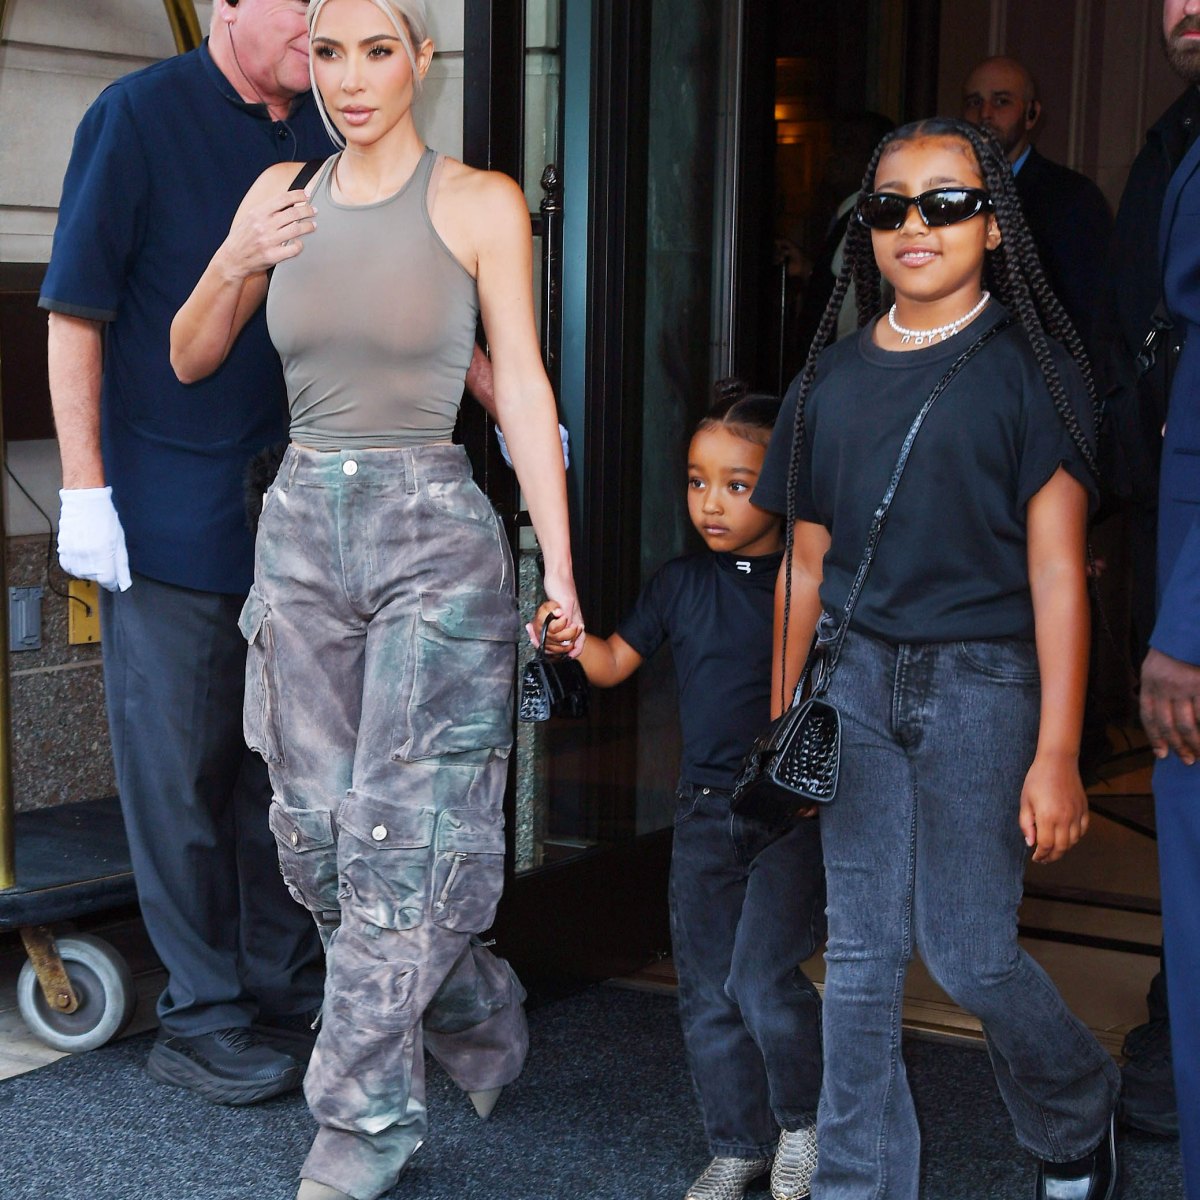 Kim Kardashian Takes Her Kids to the American Dream Mall in NJ